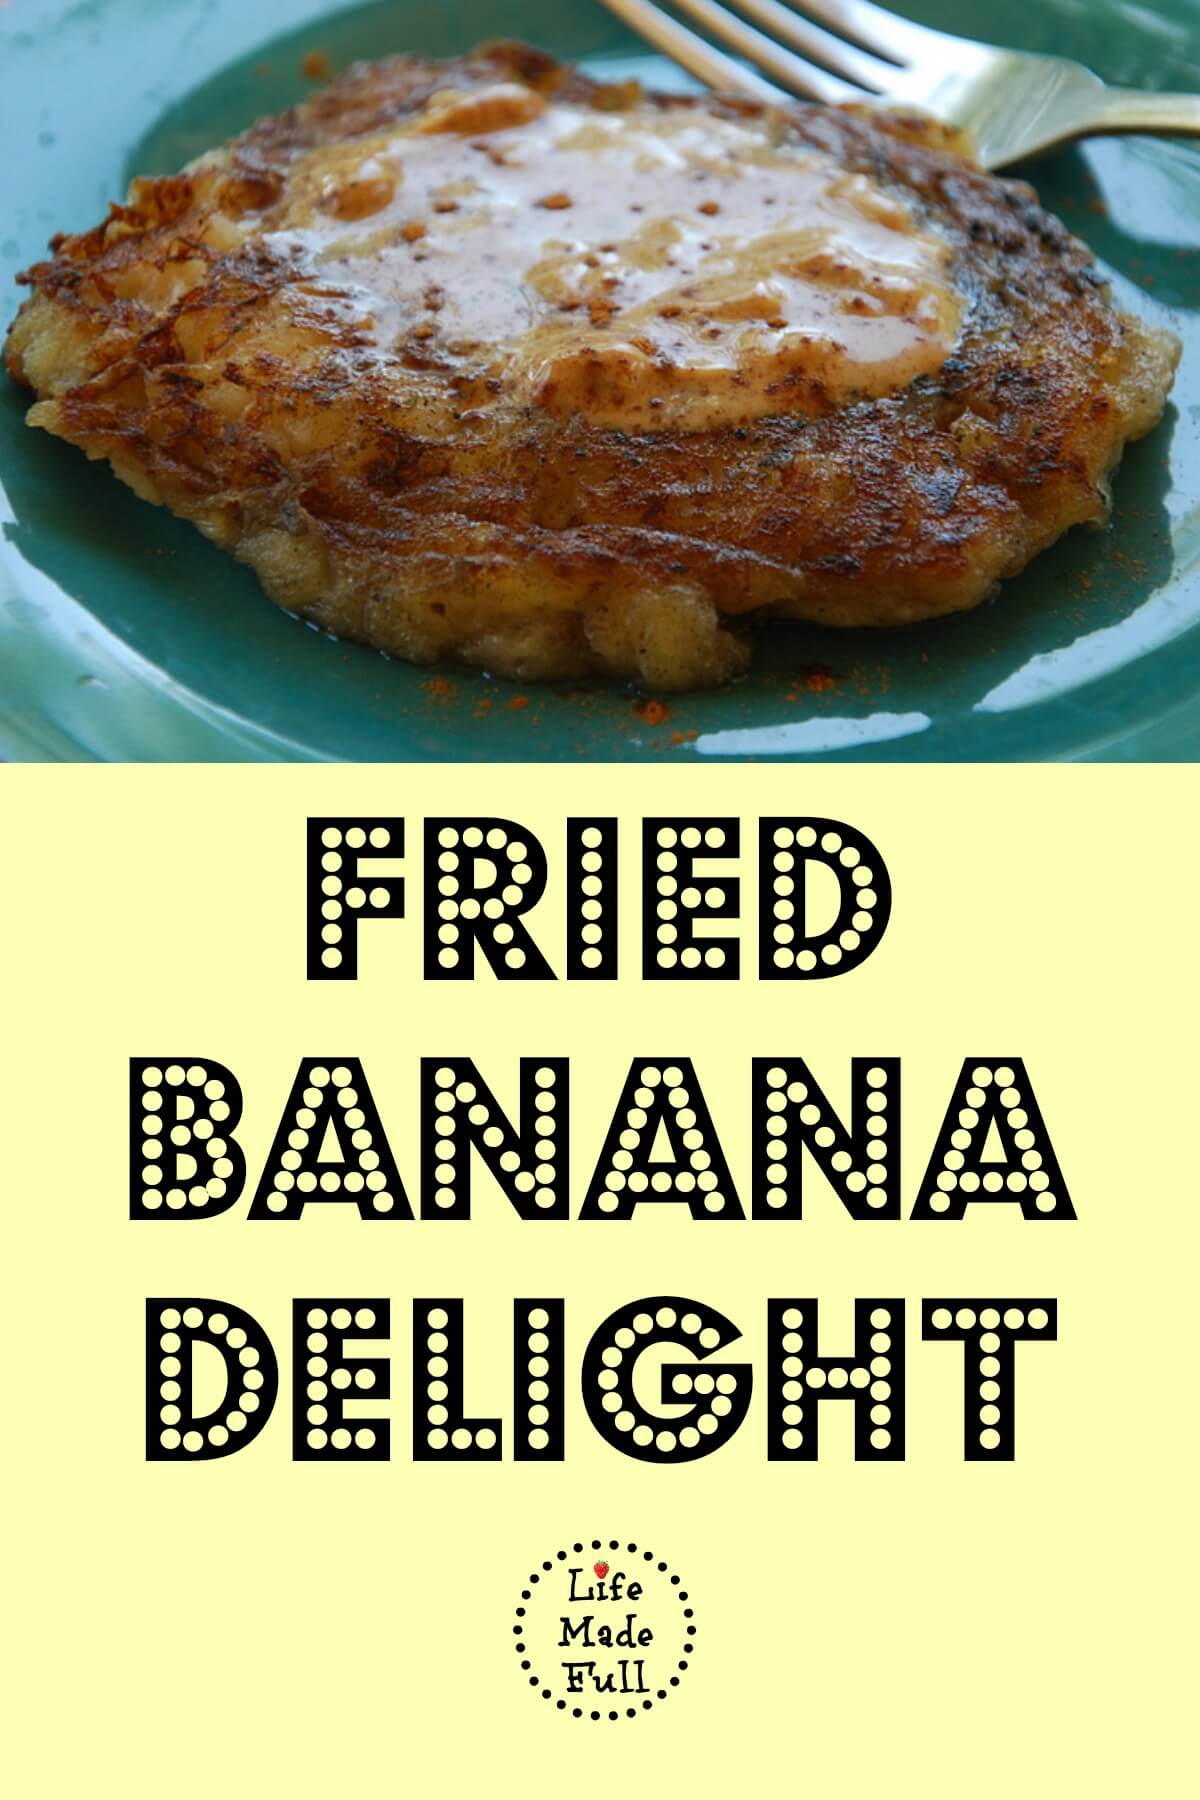 Fried Banana Delight